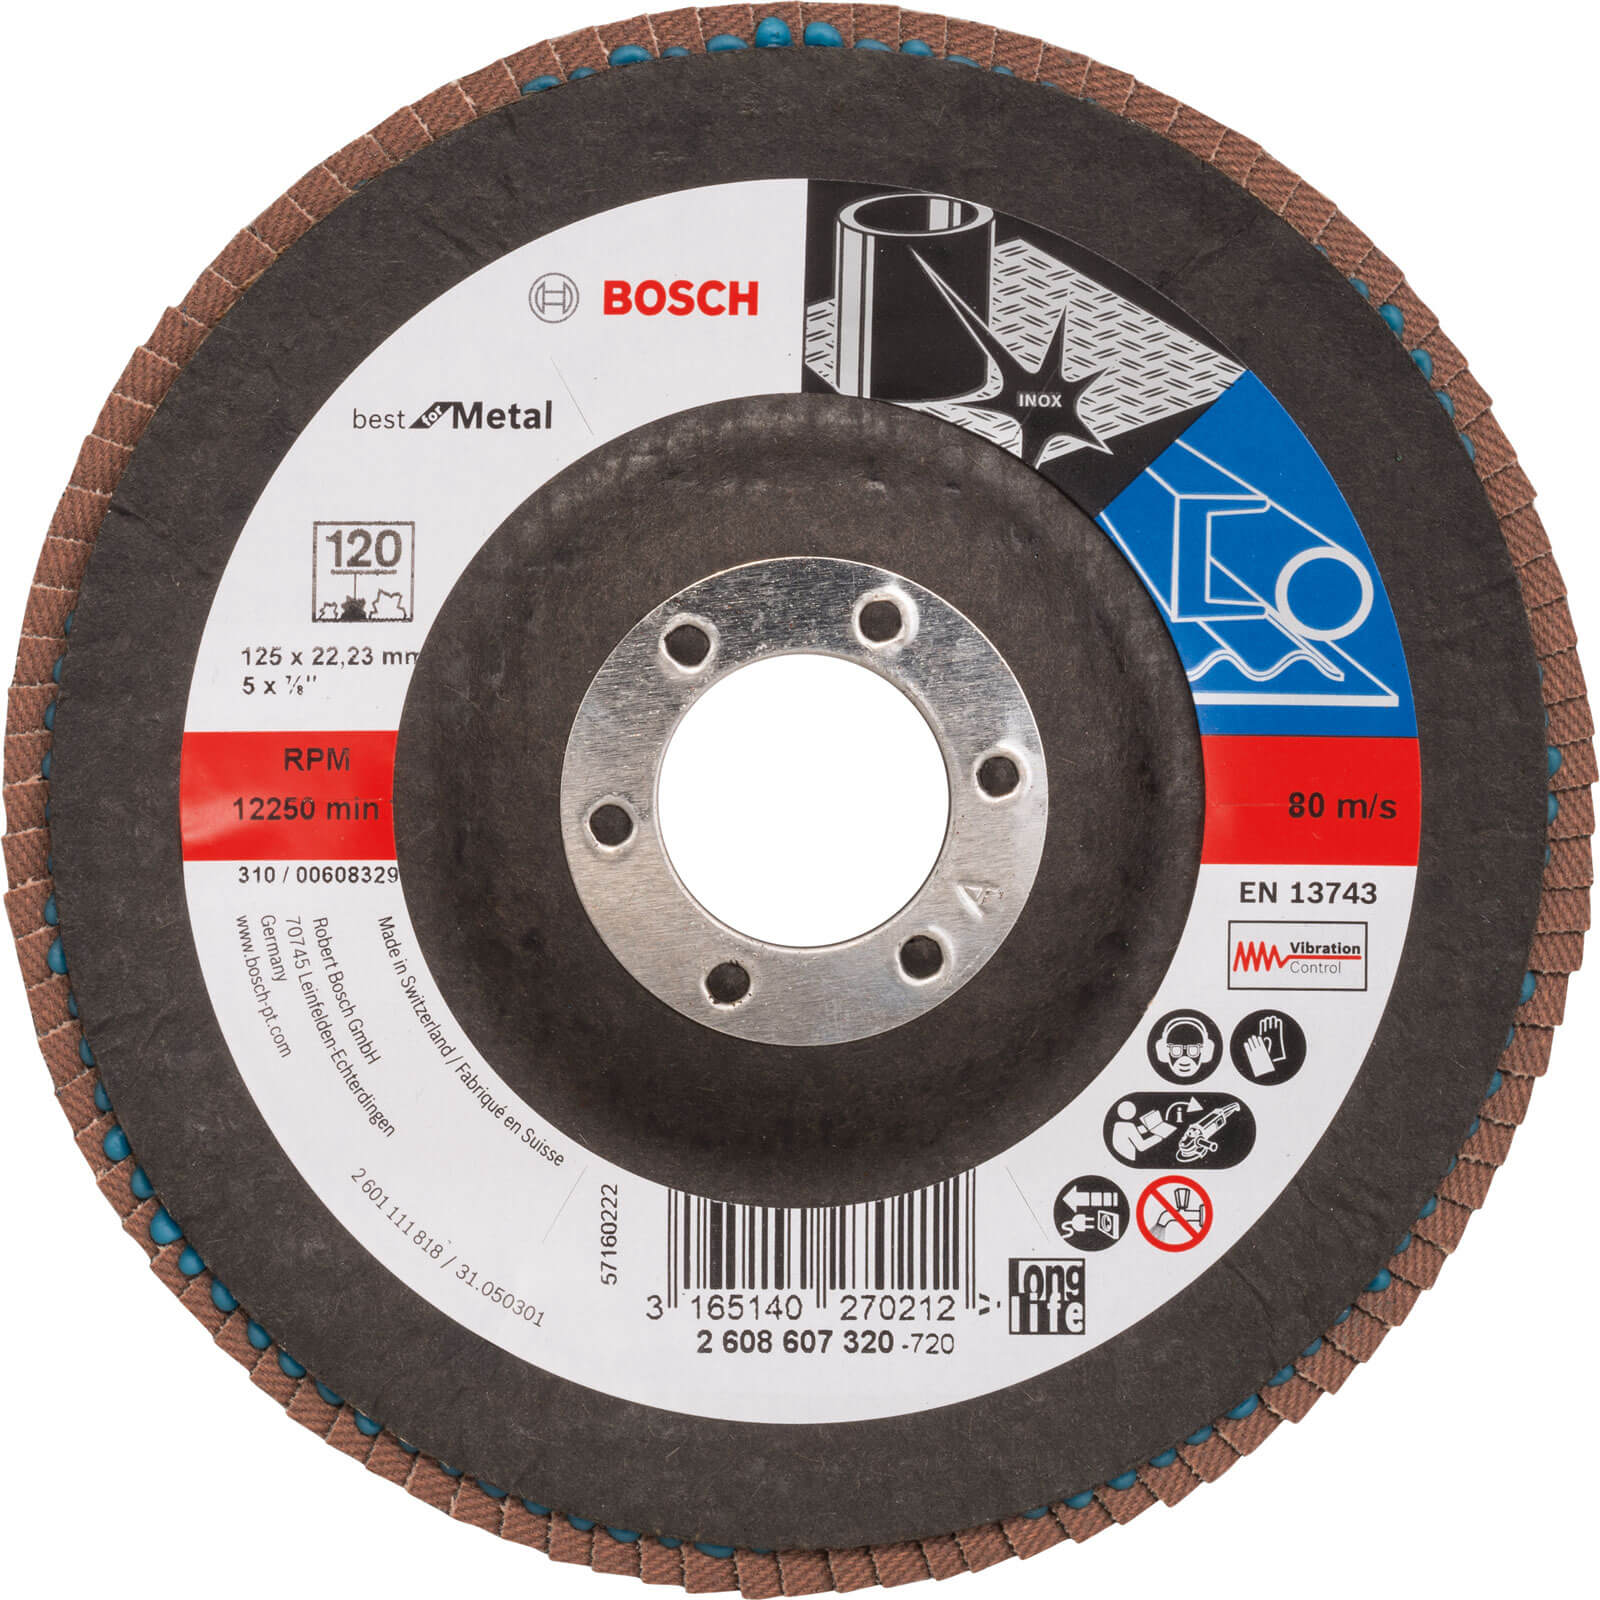 Photo of Bosch Zirconium Abrasive Flap Disc 125mm 120g